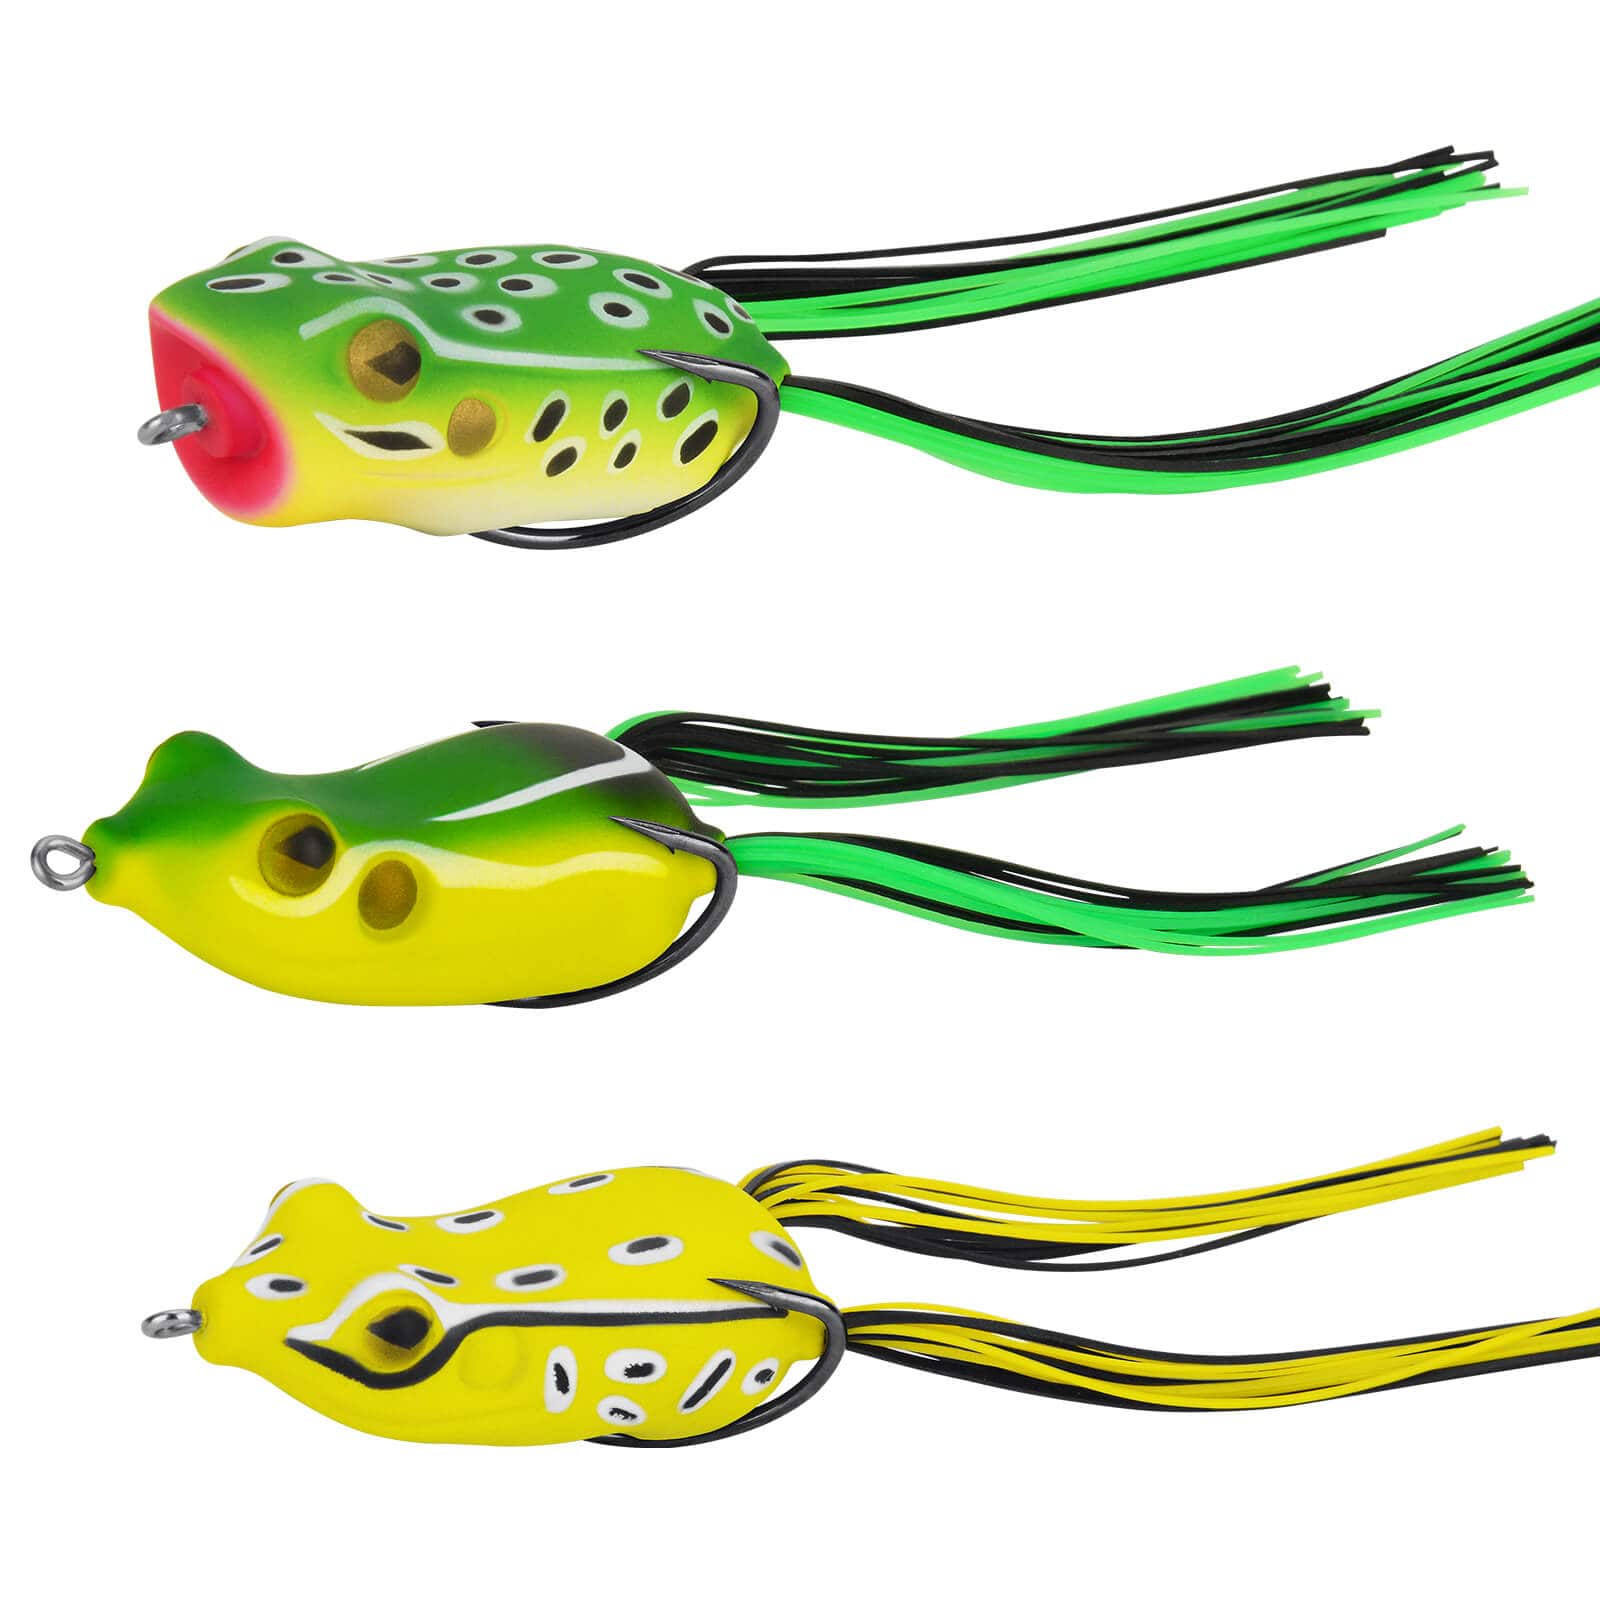 MadBite 3/5 Pack Frog Fishing Lure Kits - A: 3 Pack Frog Kits